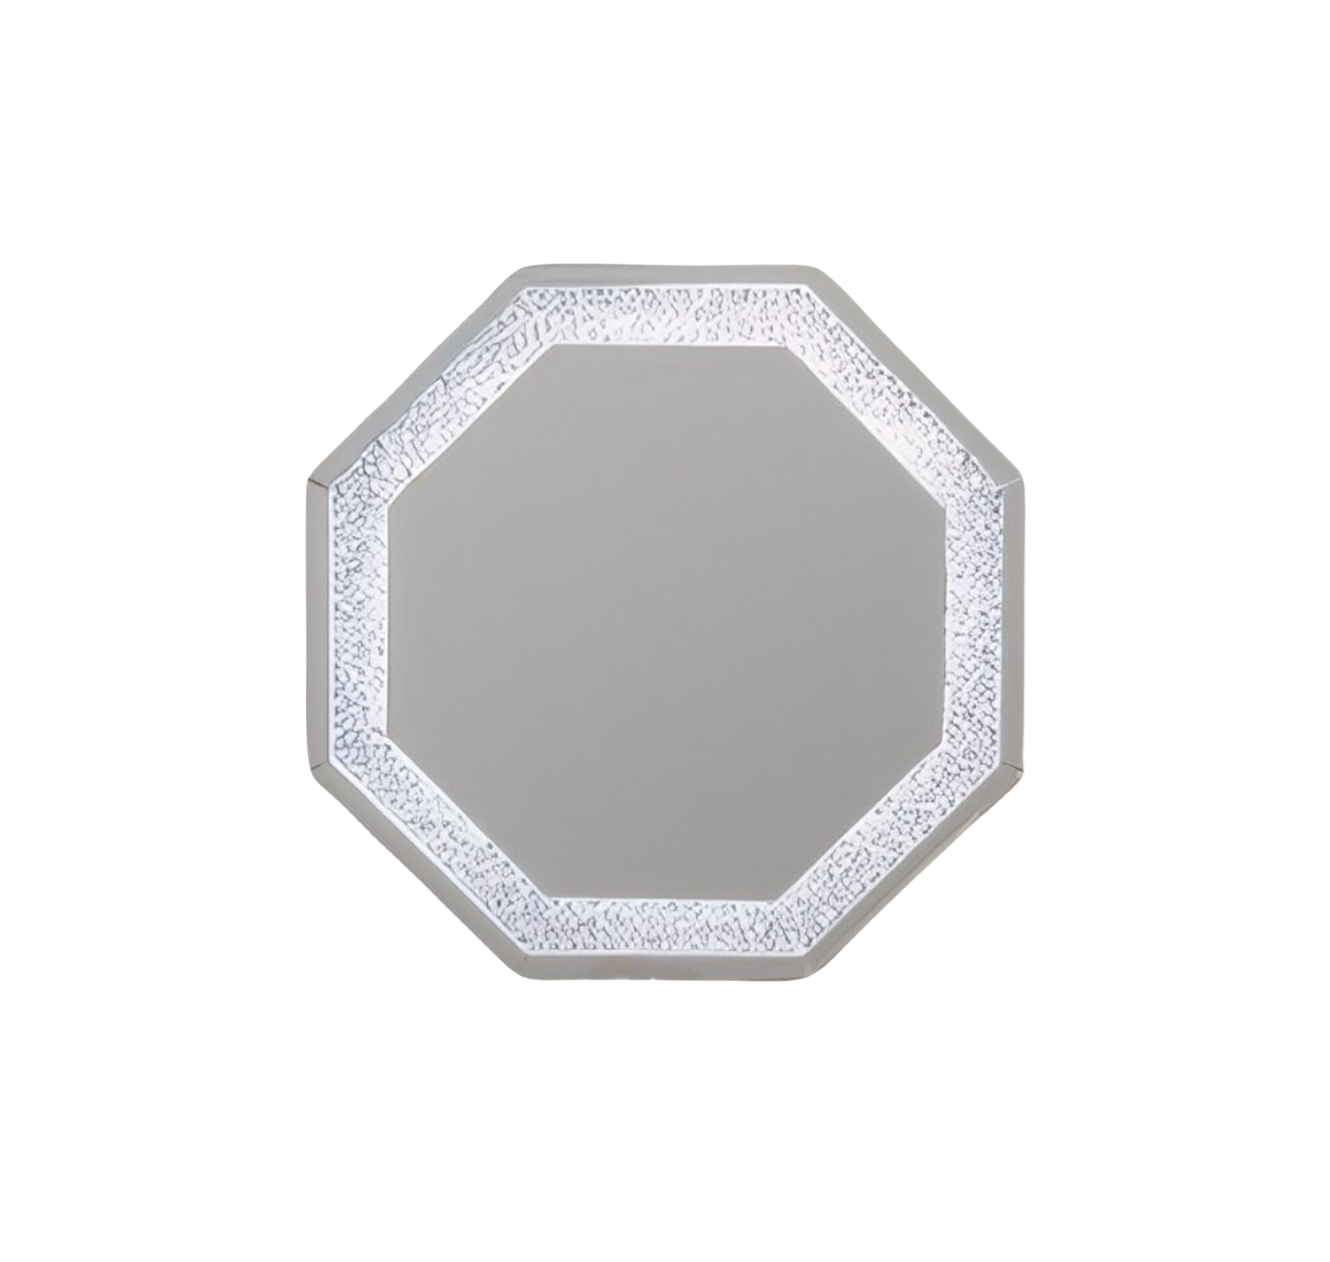 VANITII Crushed Diamonds LED Wall Mirror